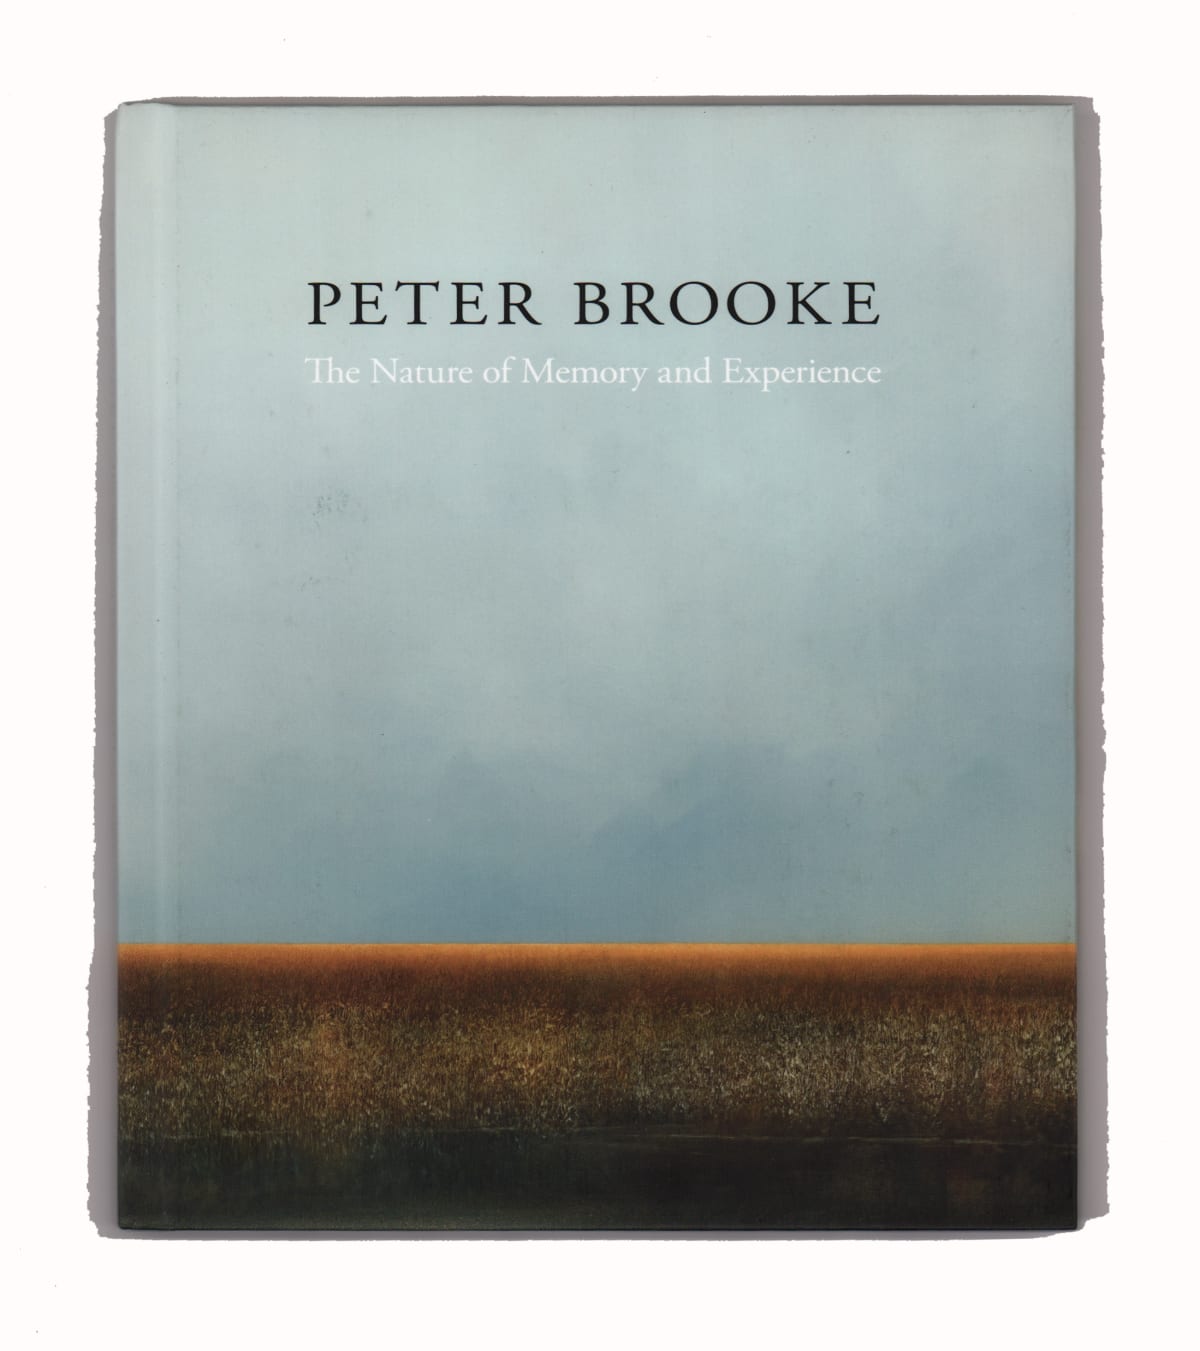 Peter Brooke